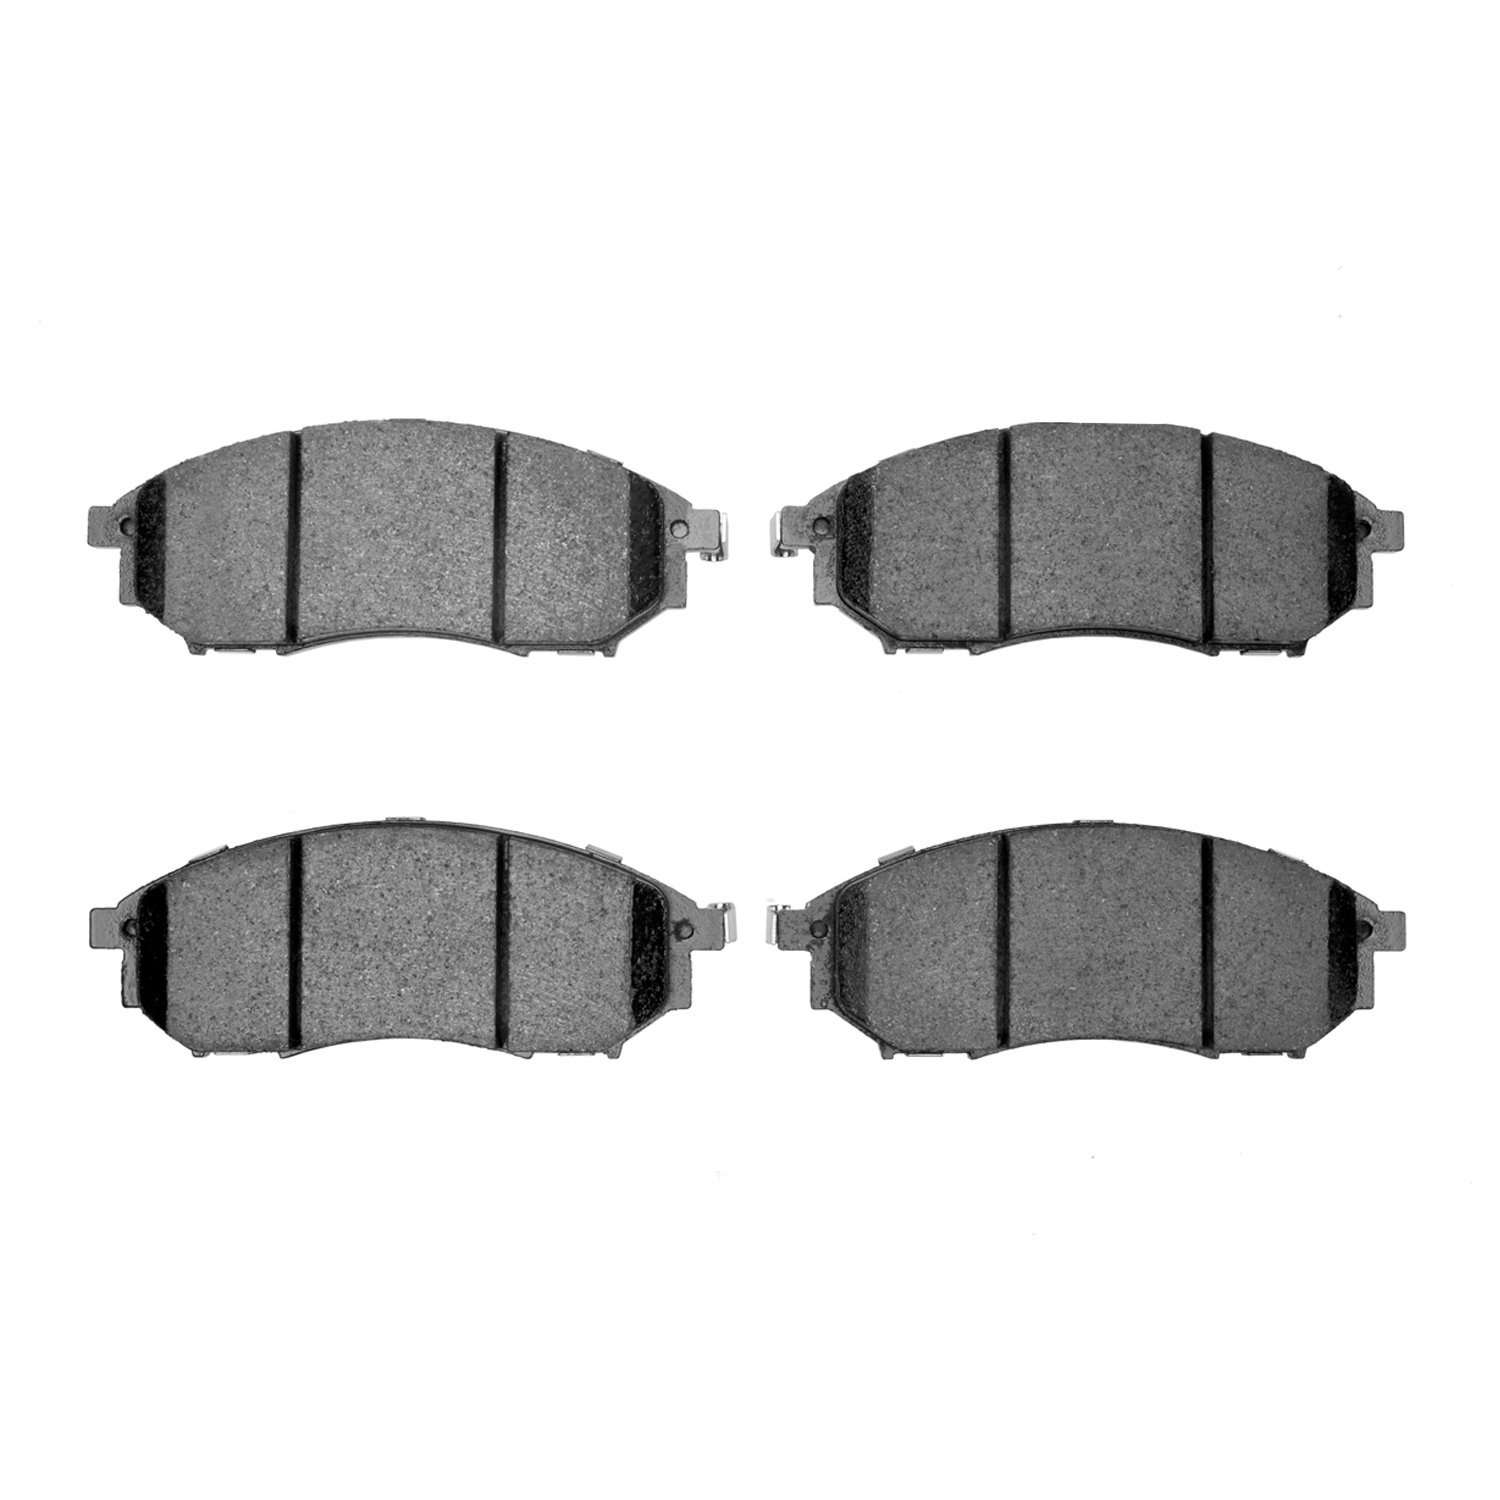 1600-0888-00 5000 Euro Ceramic Brake Pads, 2002-2020 Multiple Makes/Models, Position: Front